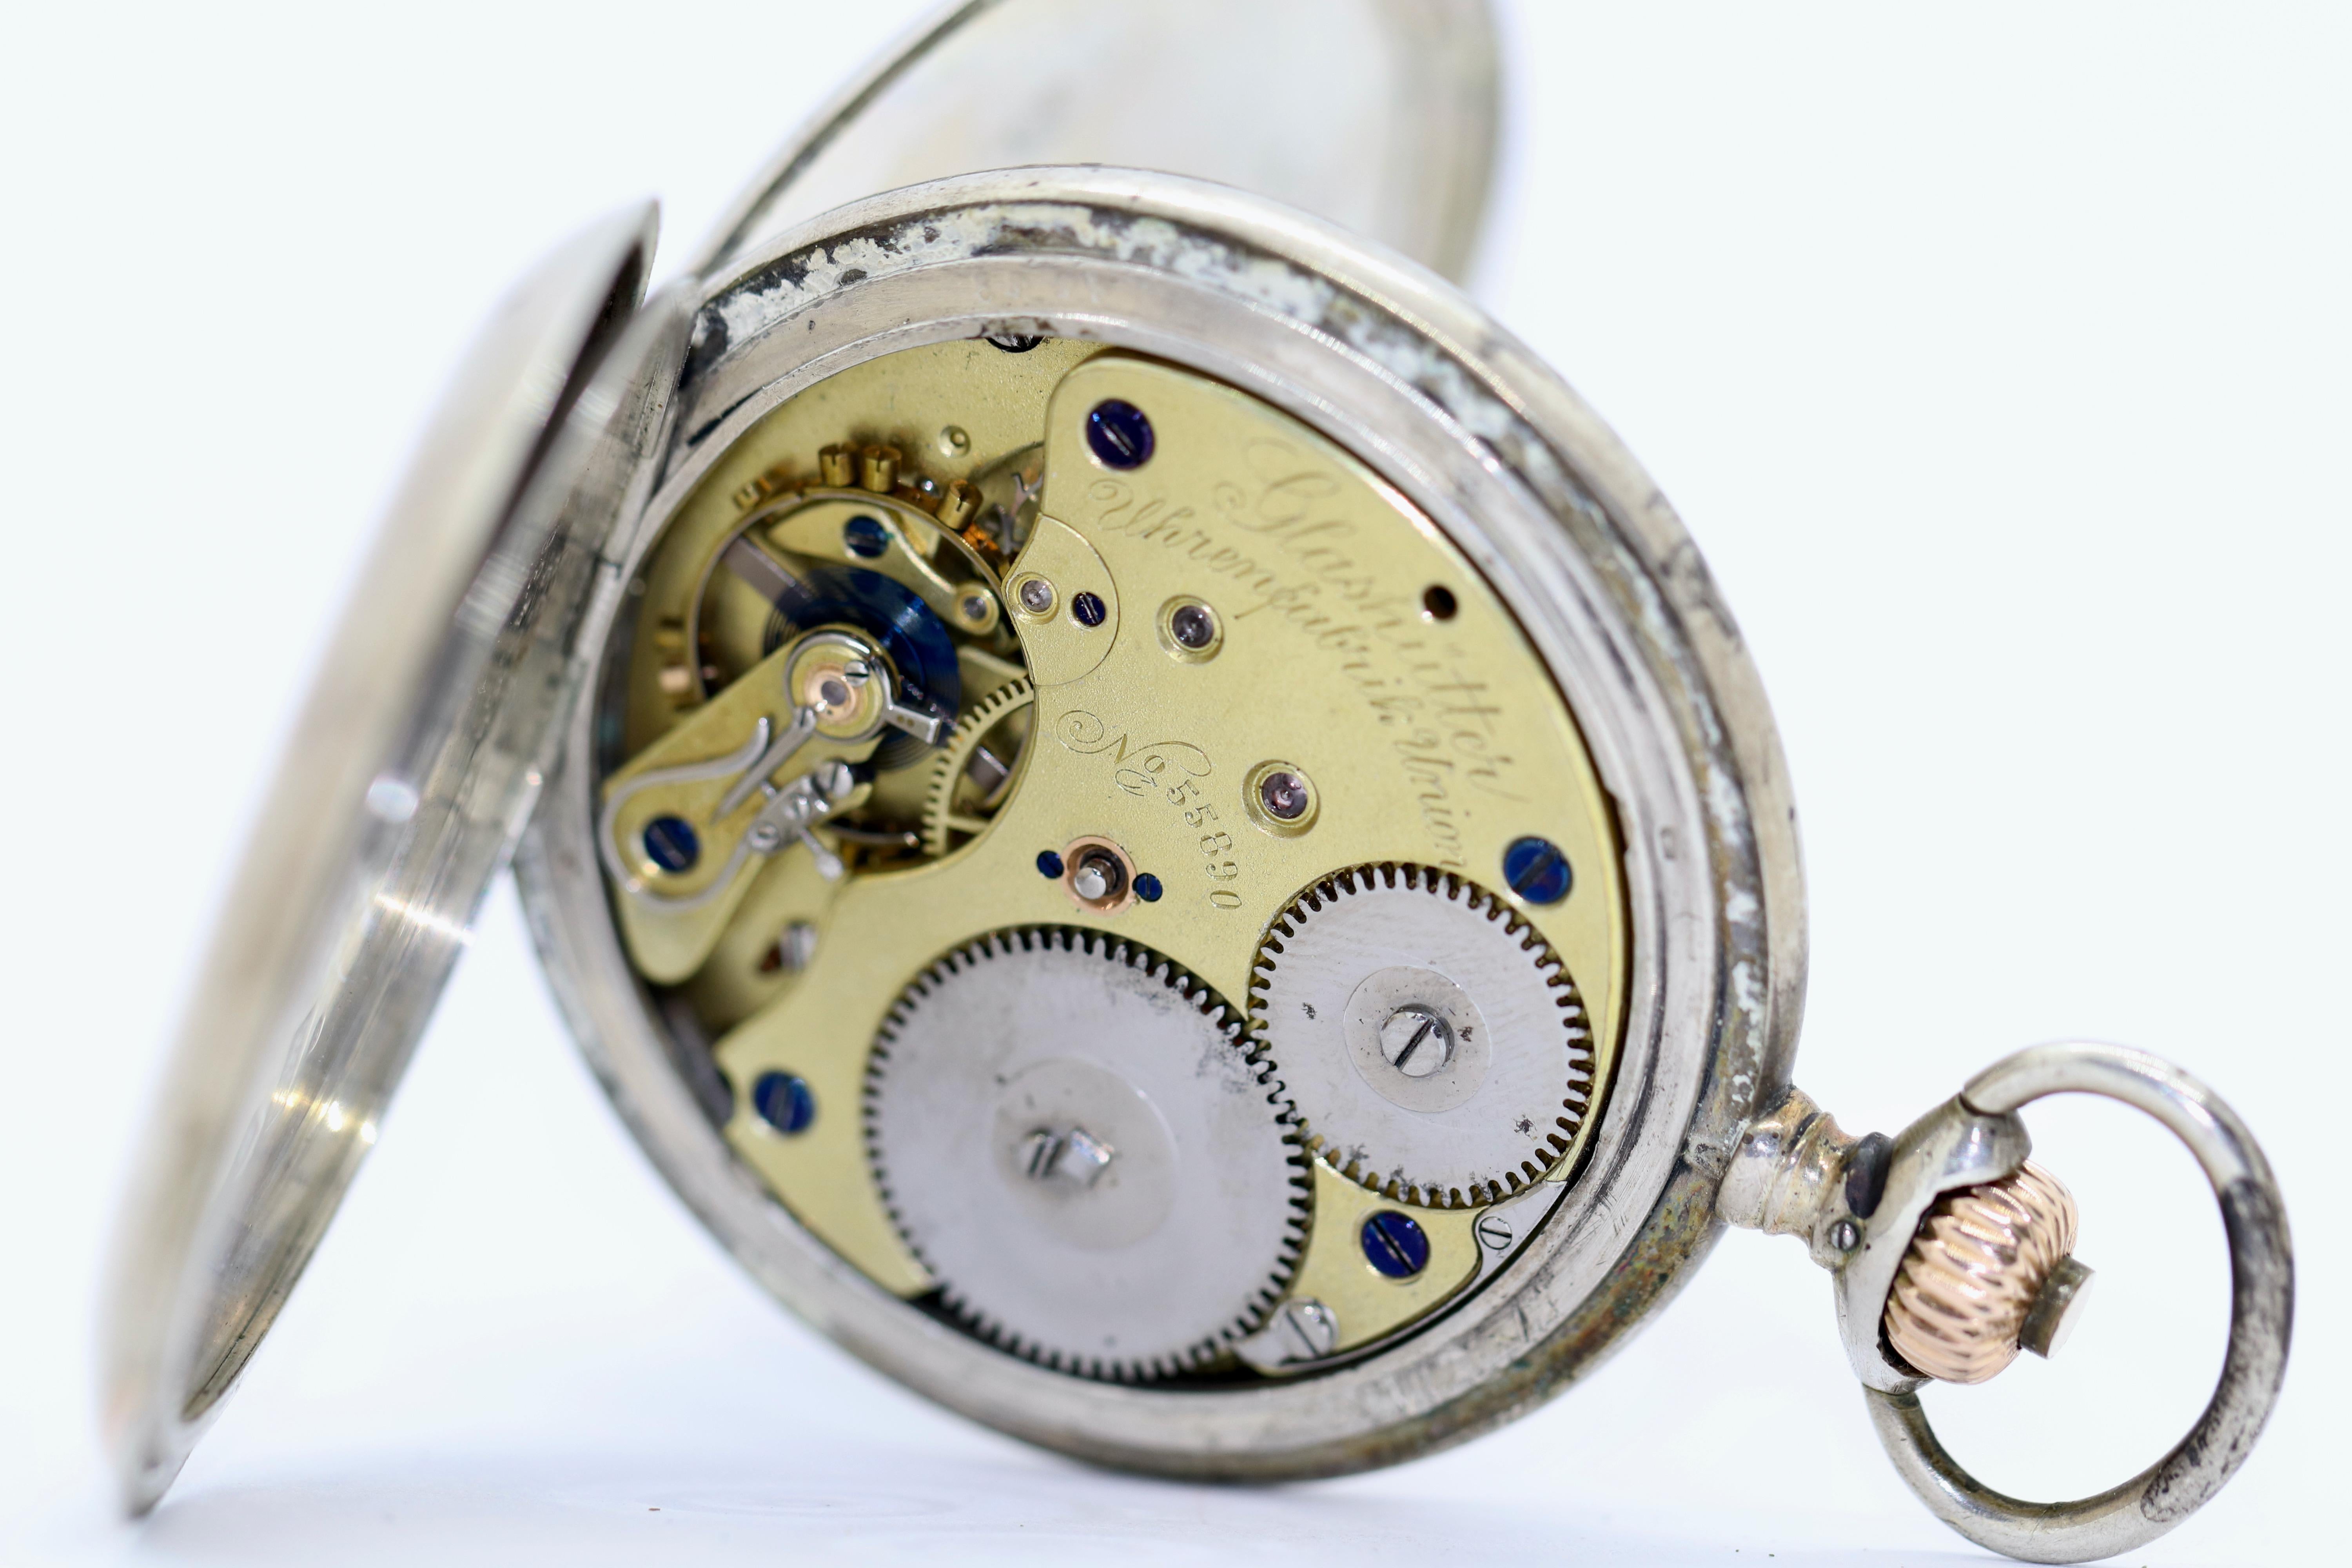 Glashütte Uhrenfabrik Union Silver Pocket Watch, Case by Dürrstein & Co. For Sale 3